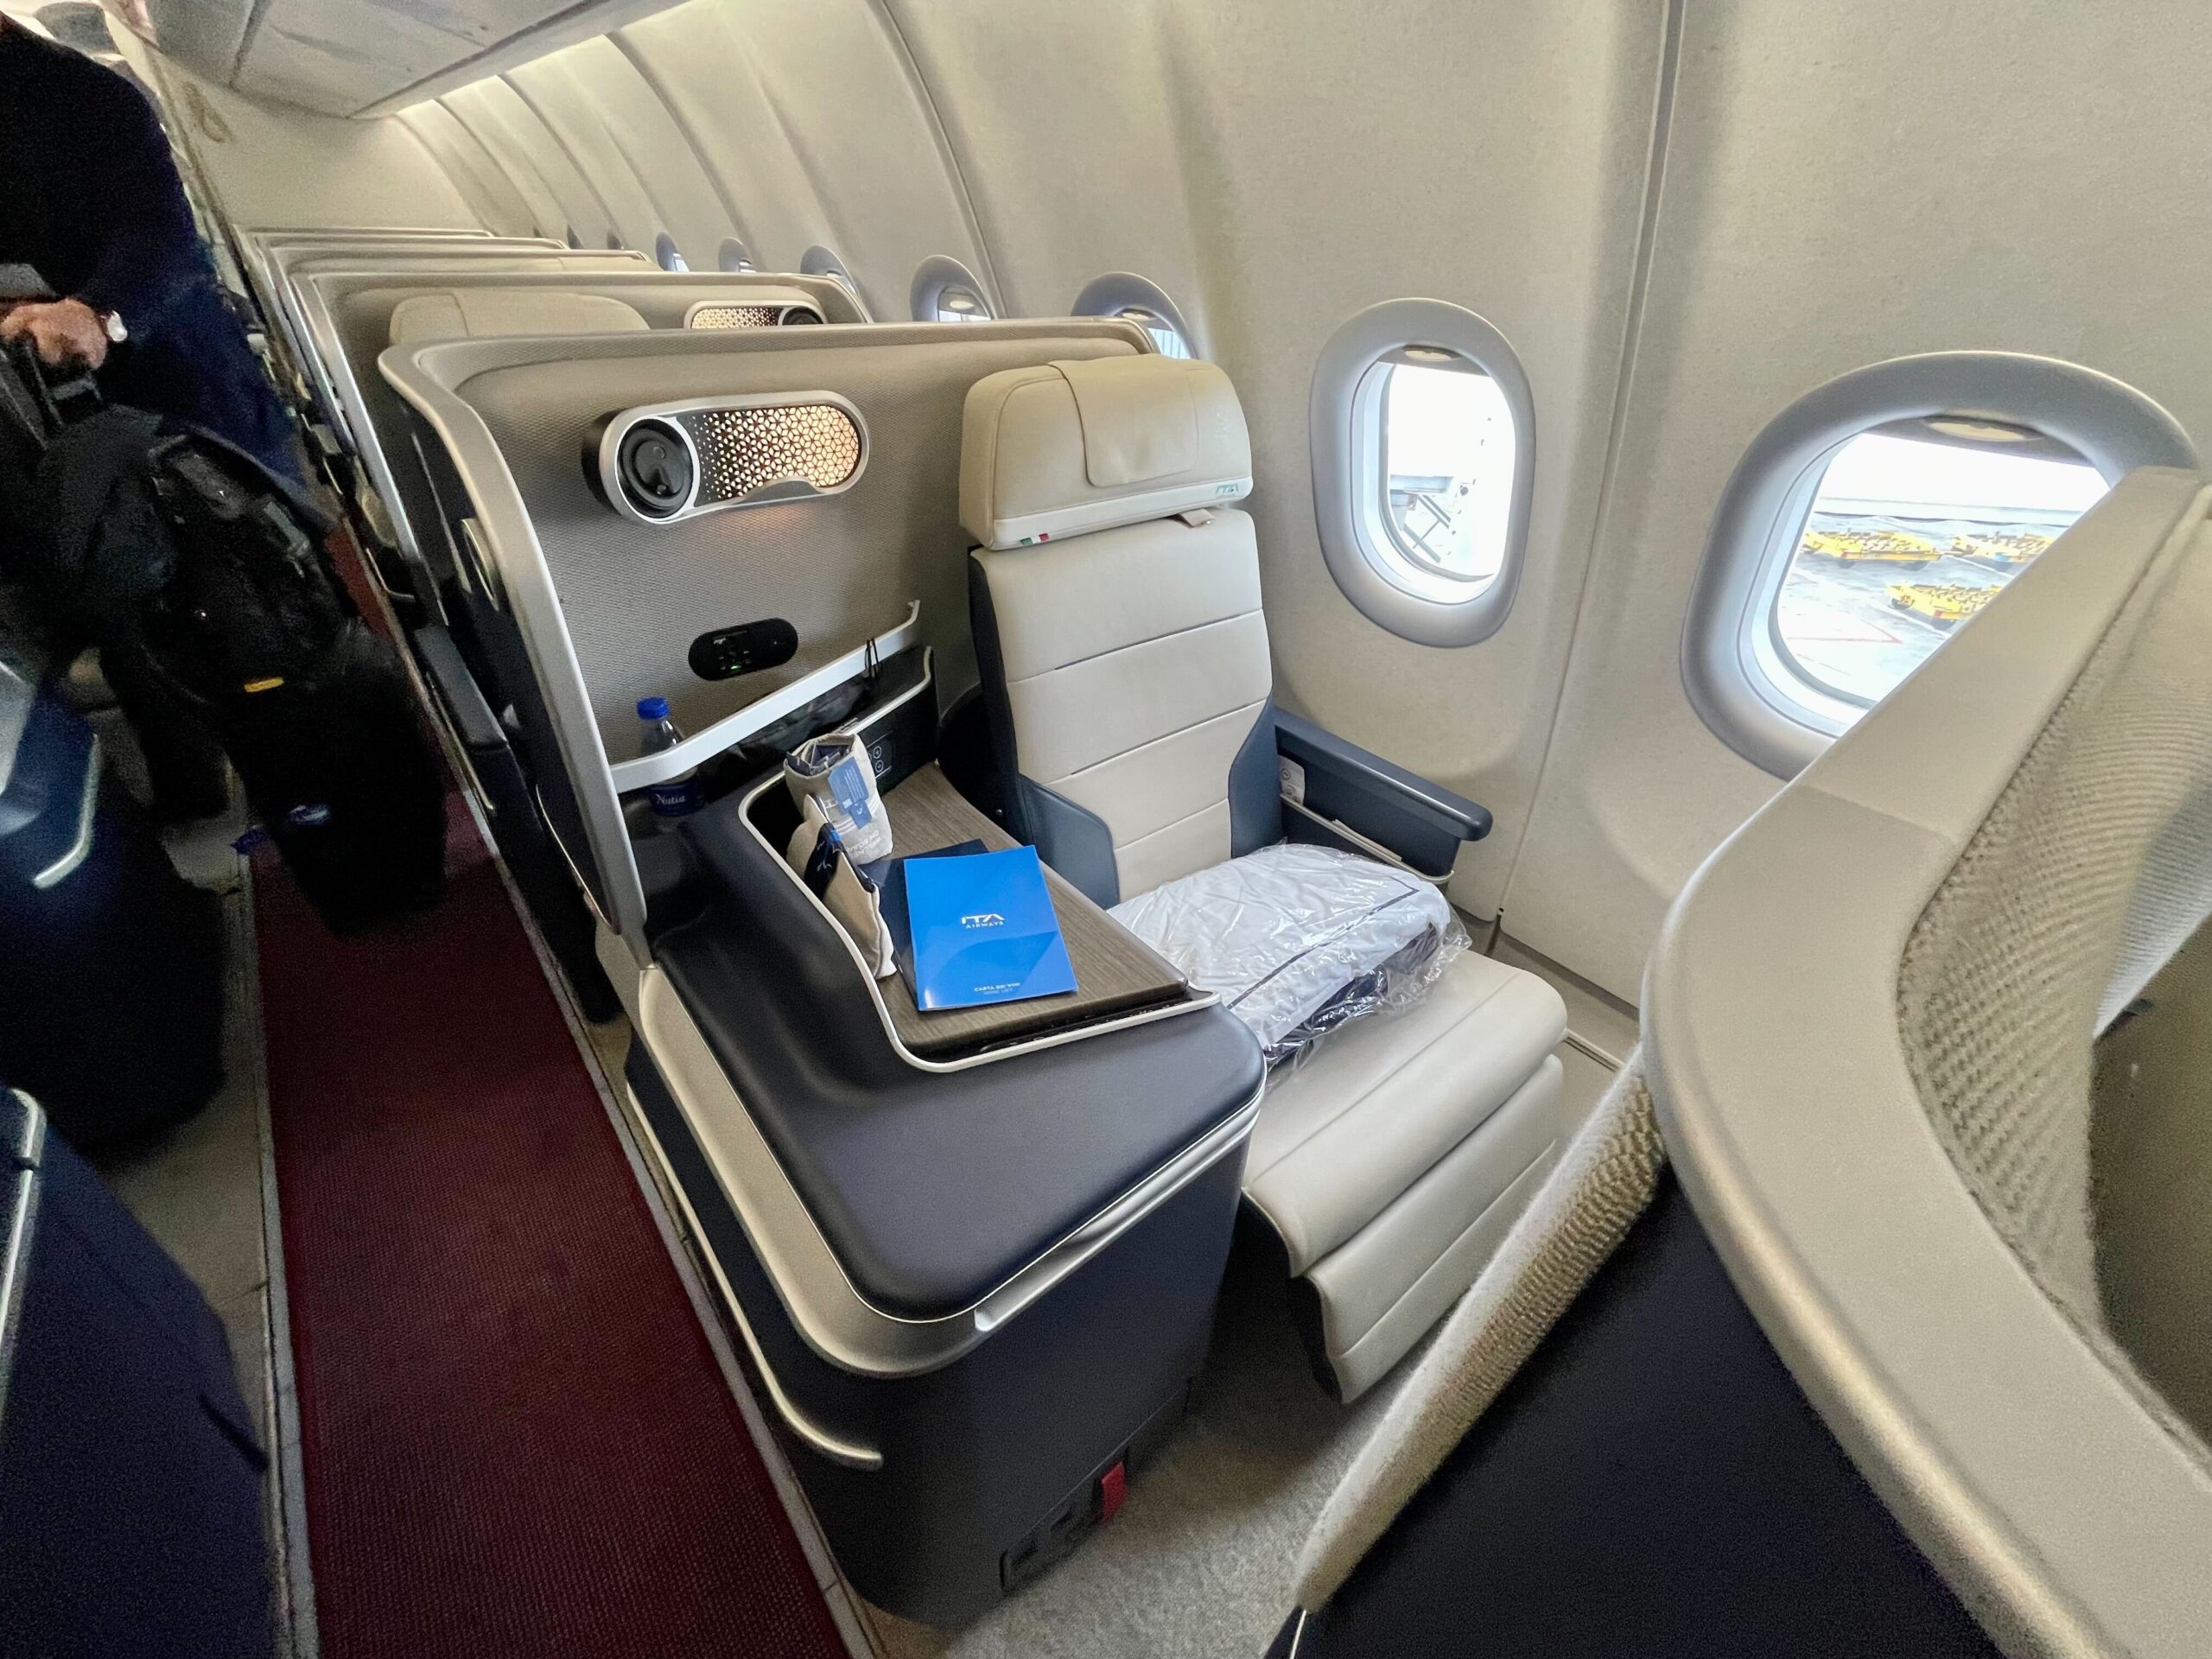 ITA Airways business class seat